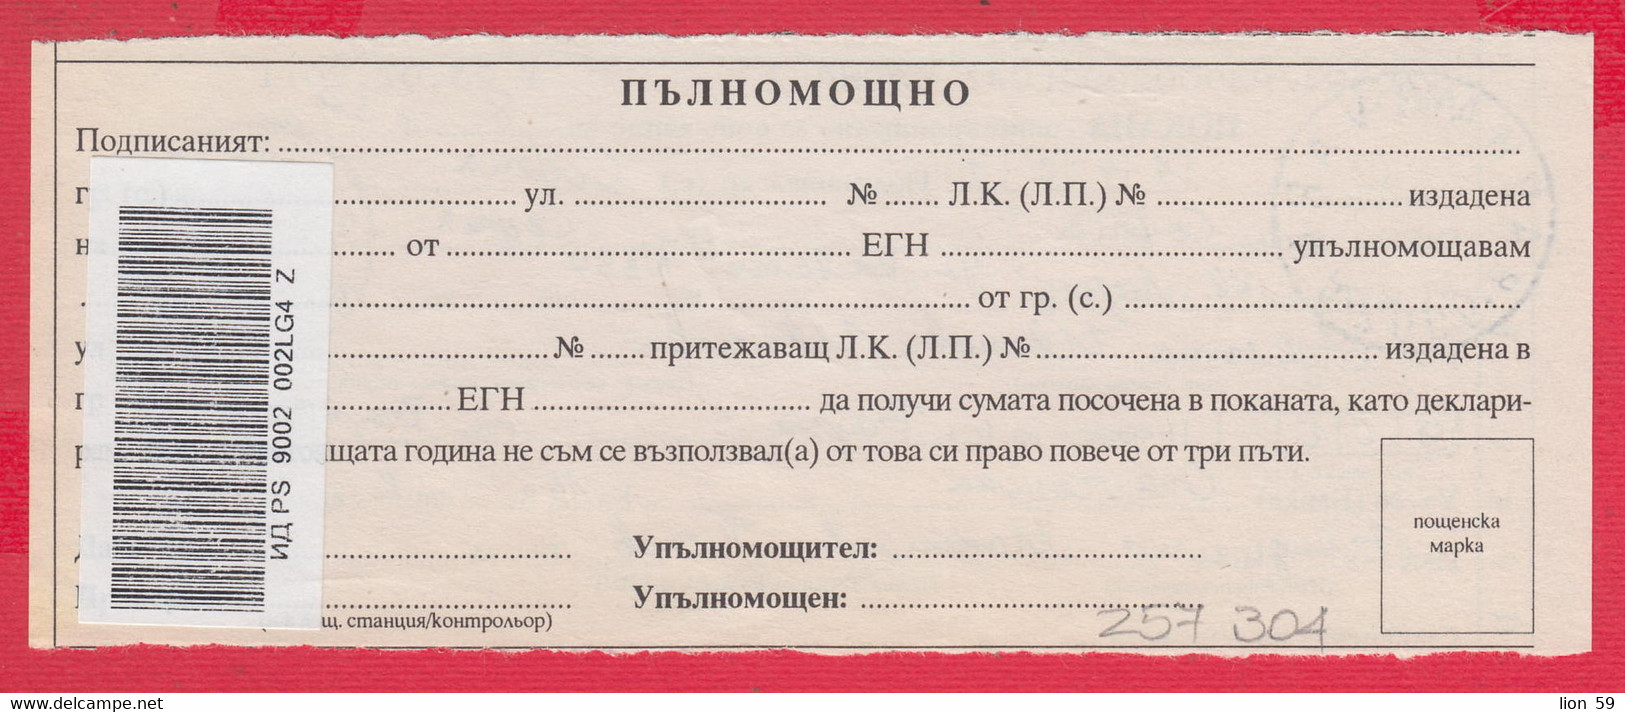 257304 / Bulgaria 2011 - Invitation - Confirmation For Postal Money Order , Varna - Sofia 21 , Bulgarie Bulgarien - Storia Postale